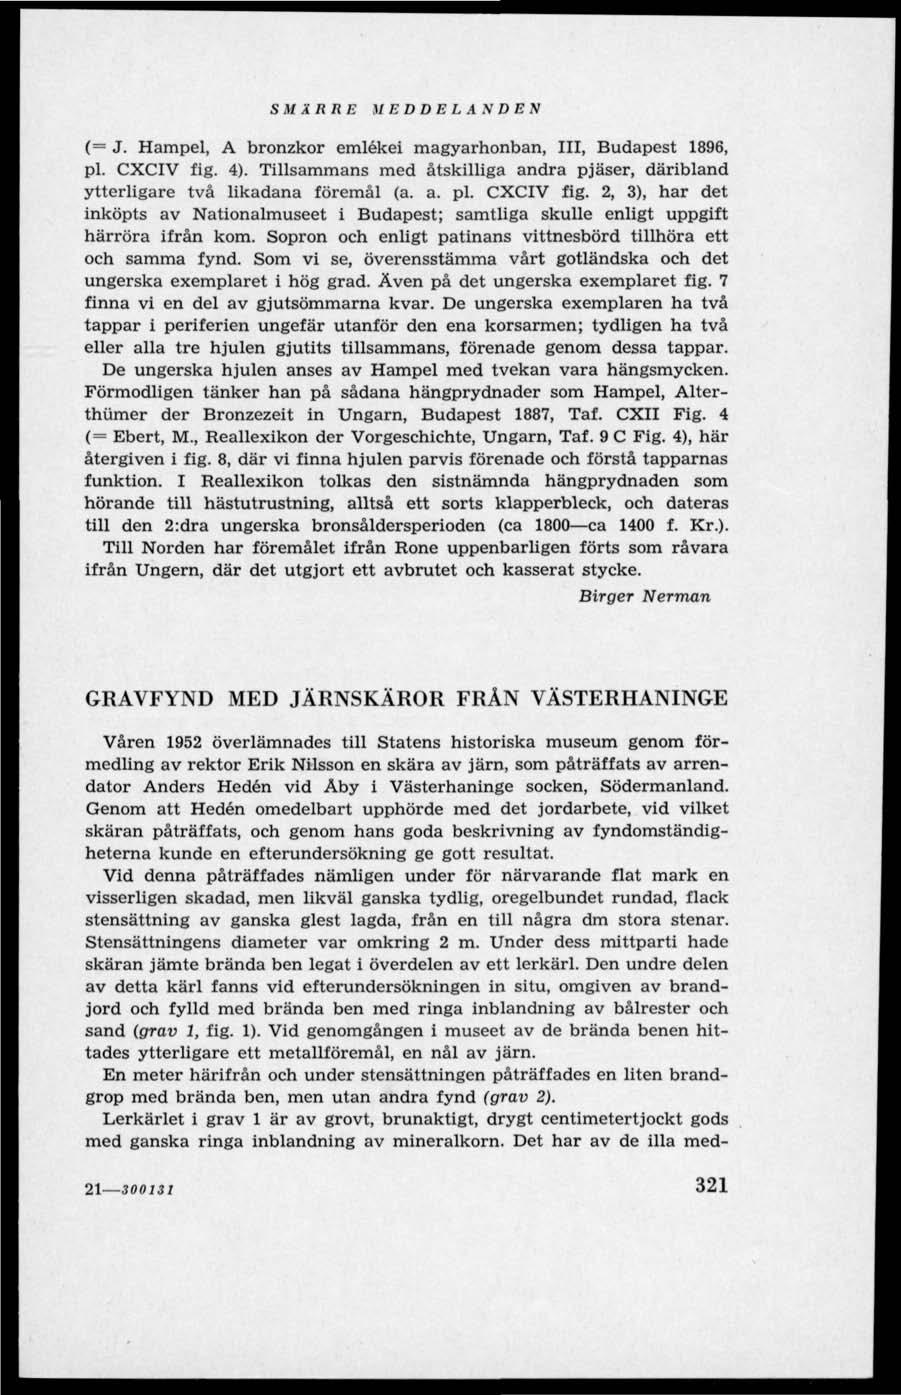 SMÄRRE M E D D E L A N D E N (= J. Hampel, A bronzkor emlékei magyarhonban, III, Budapest 1896, pl. CXCIV fig. 4).